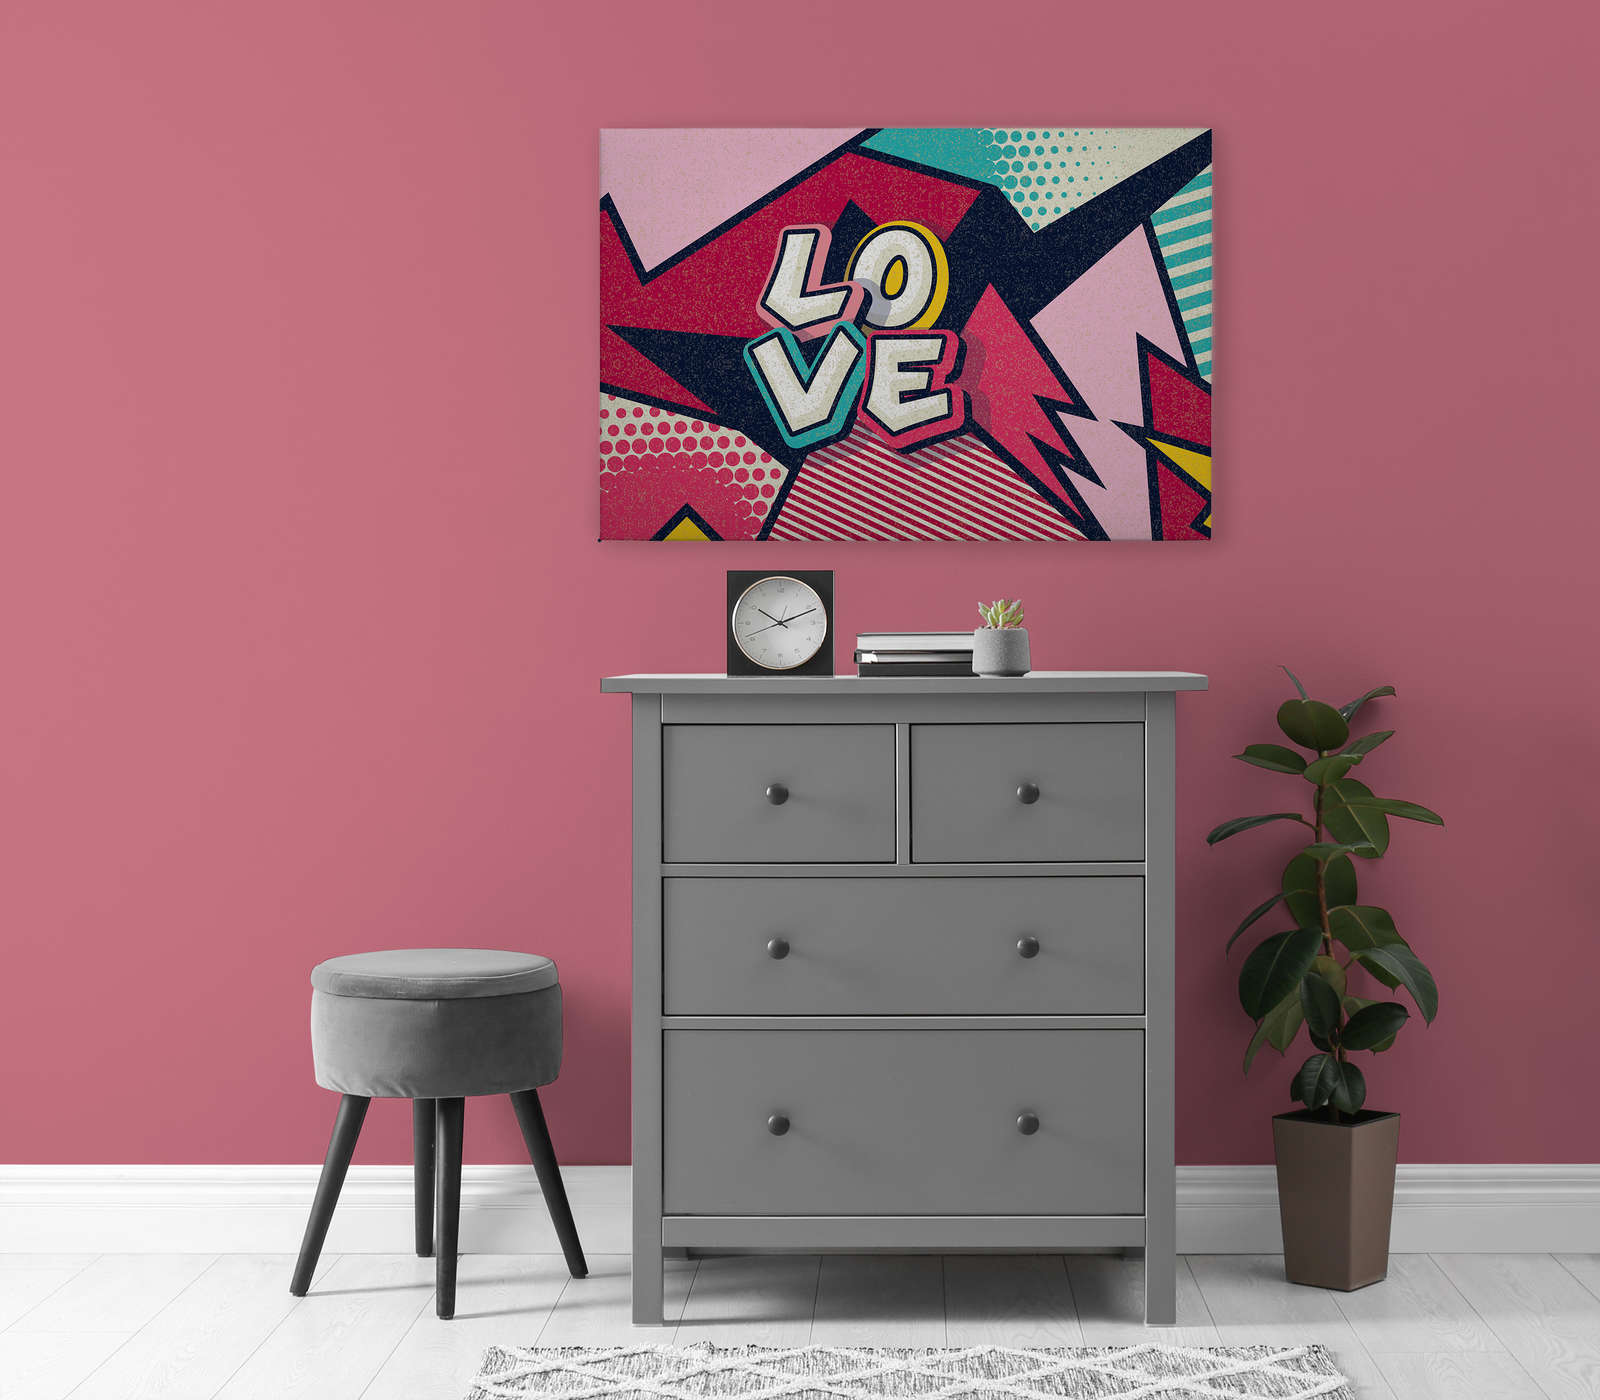             Comic Style Pop Up Love Canvas Painting - 0.90 m x 0.60 m
        